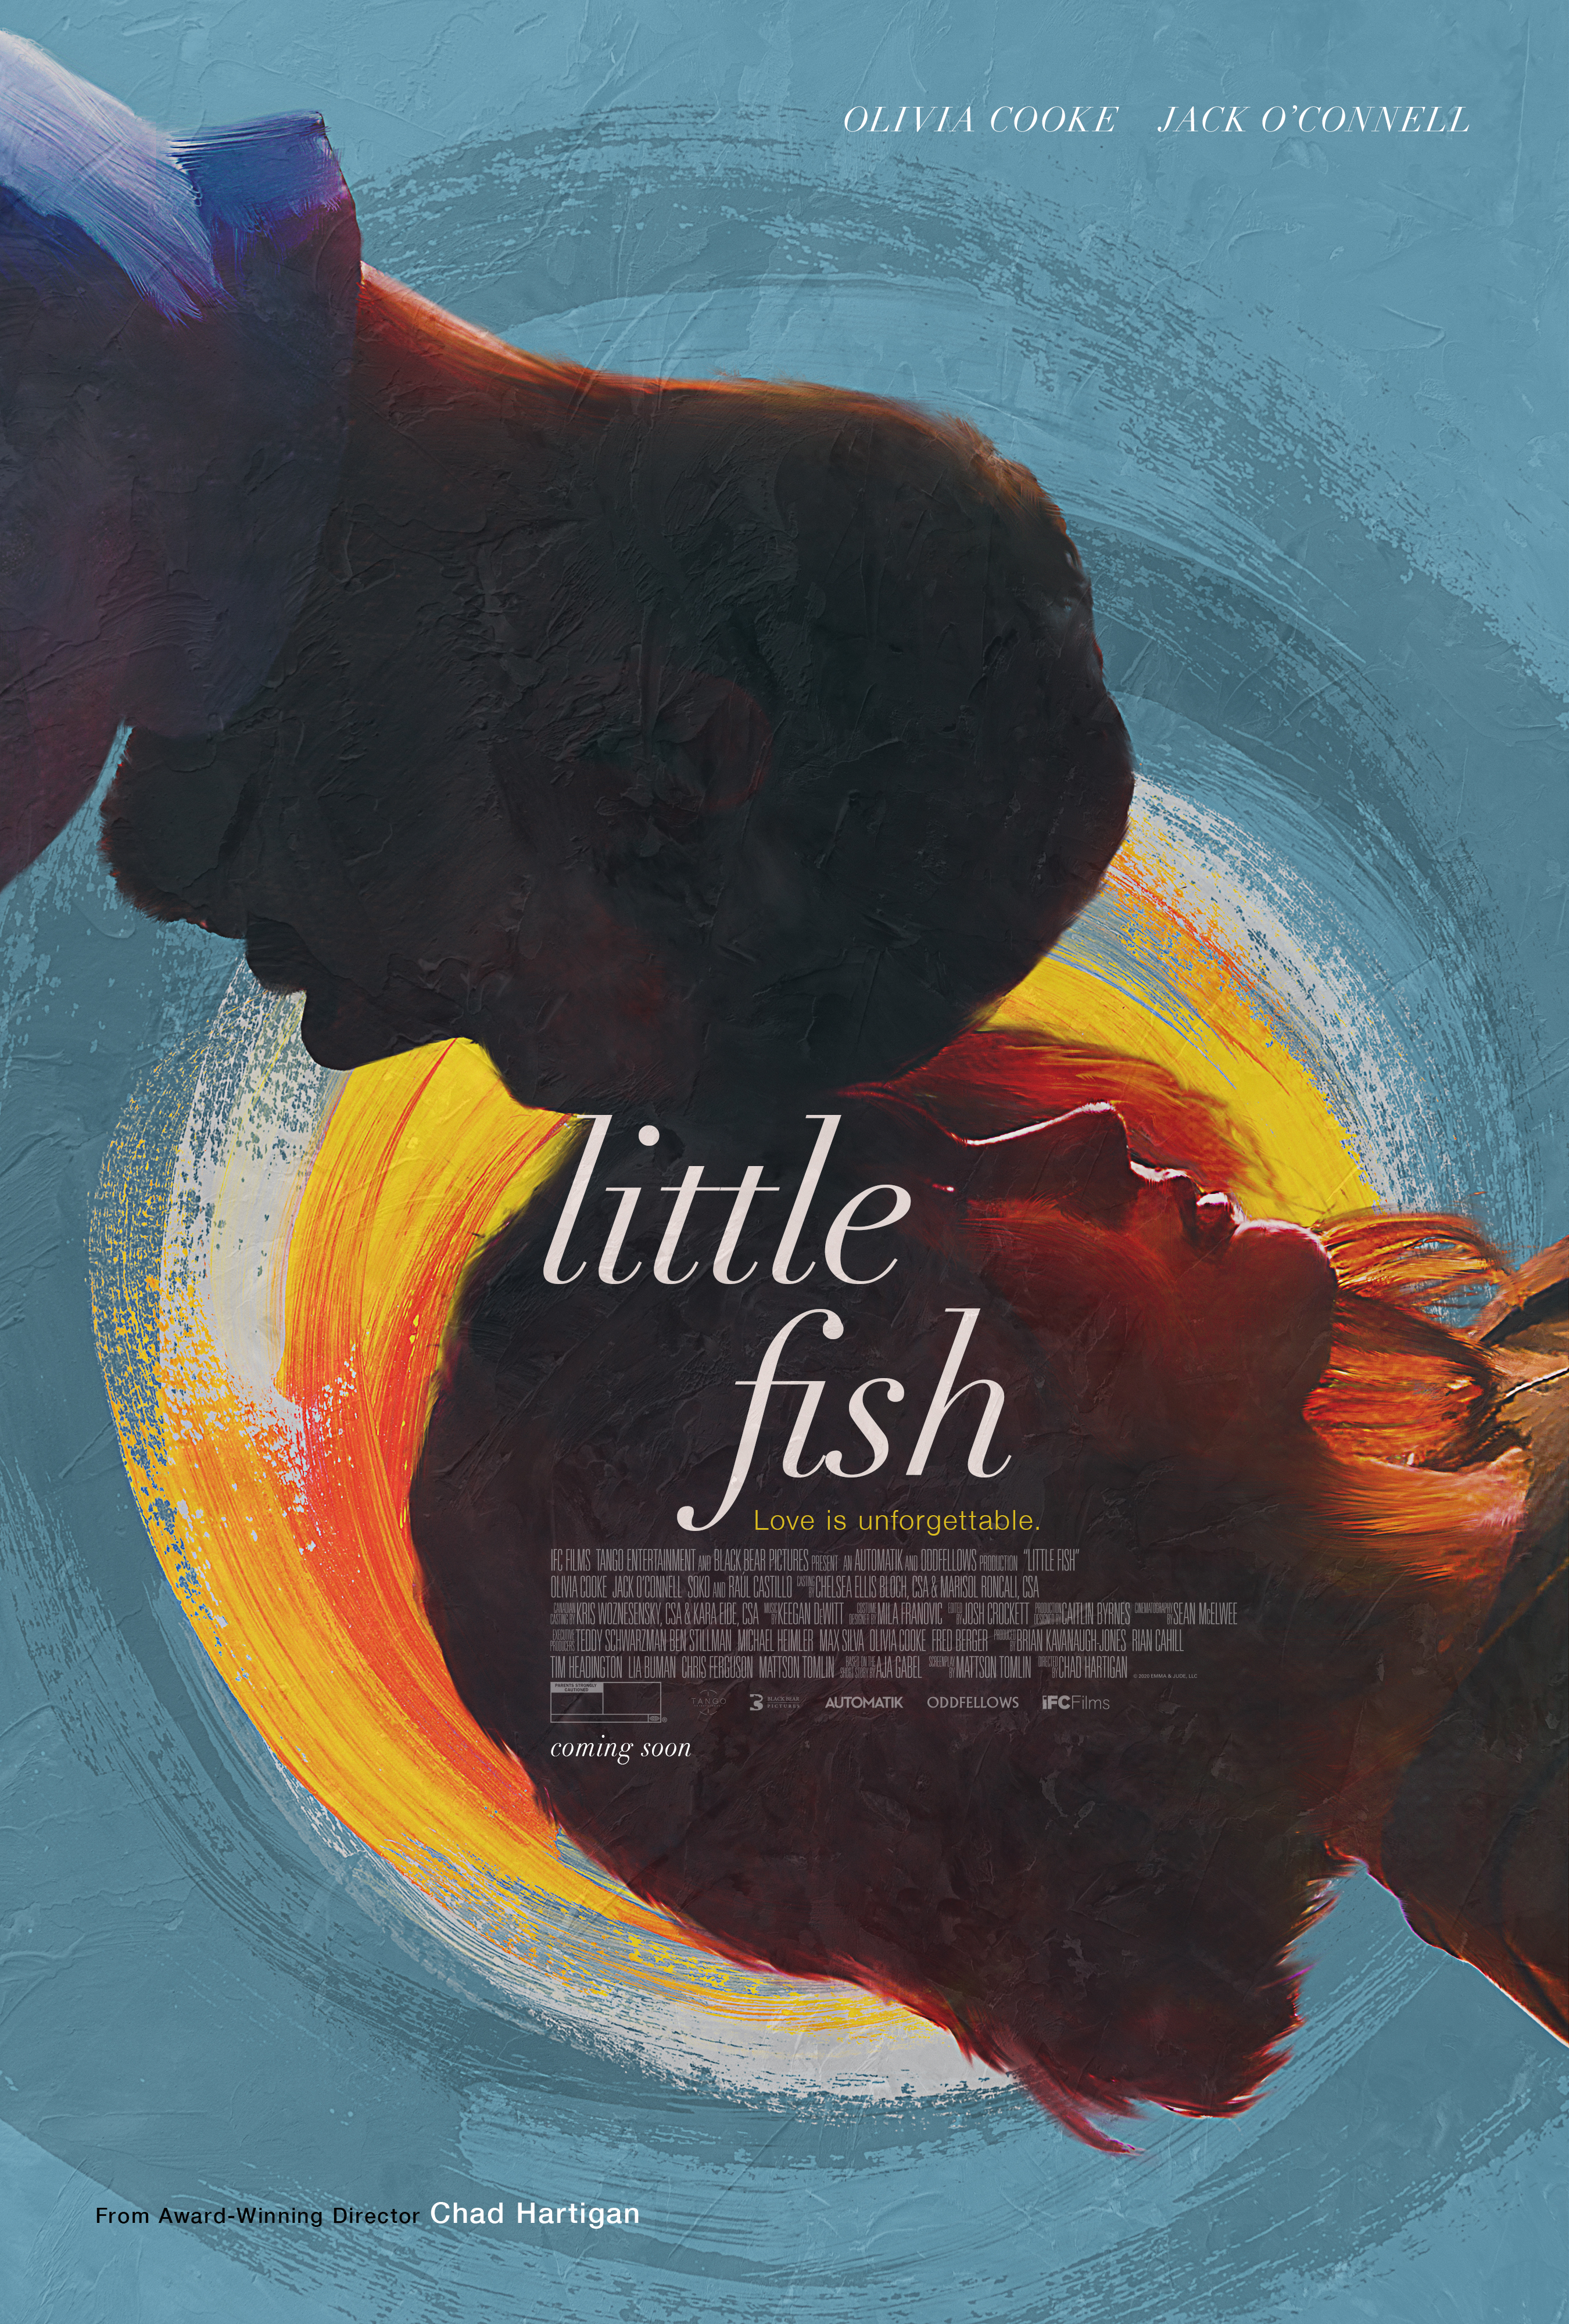 Stiahni si Filmy CZ/SK dabing Mala rybka / Little Fish (2020)(CZ)[WebRip][1080p] = CSFD 74%